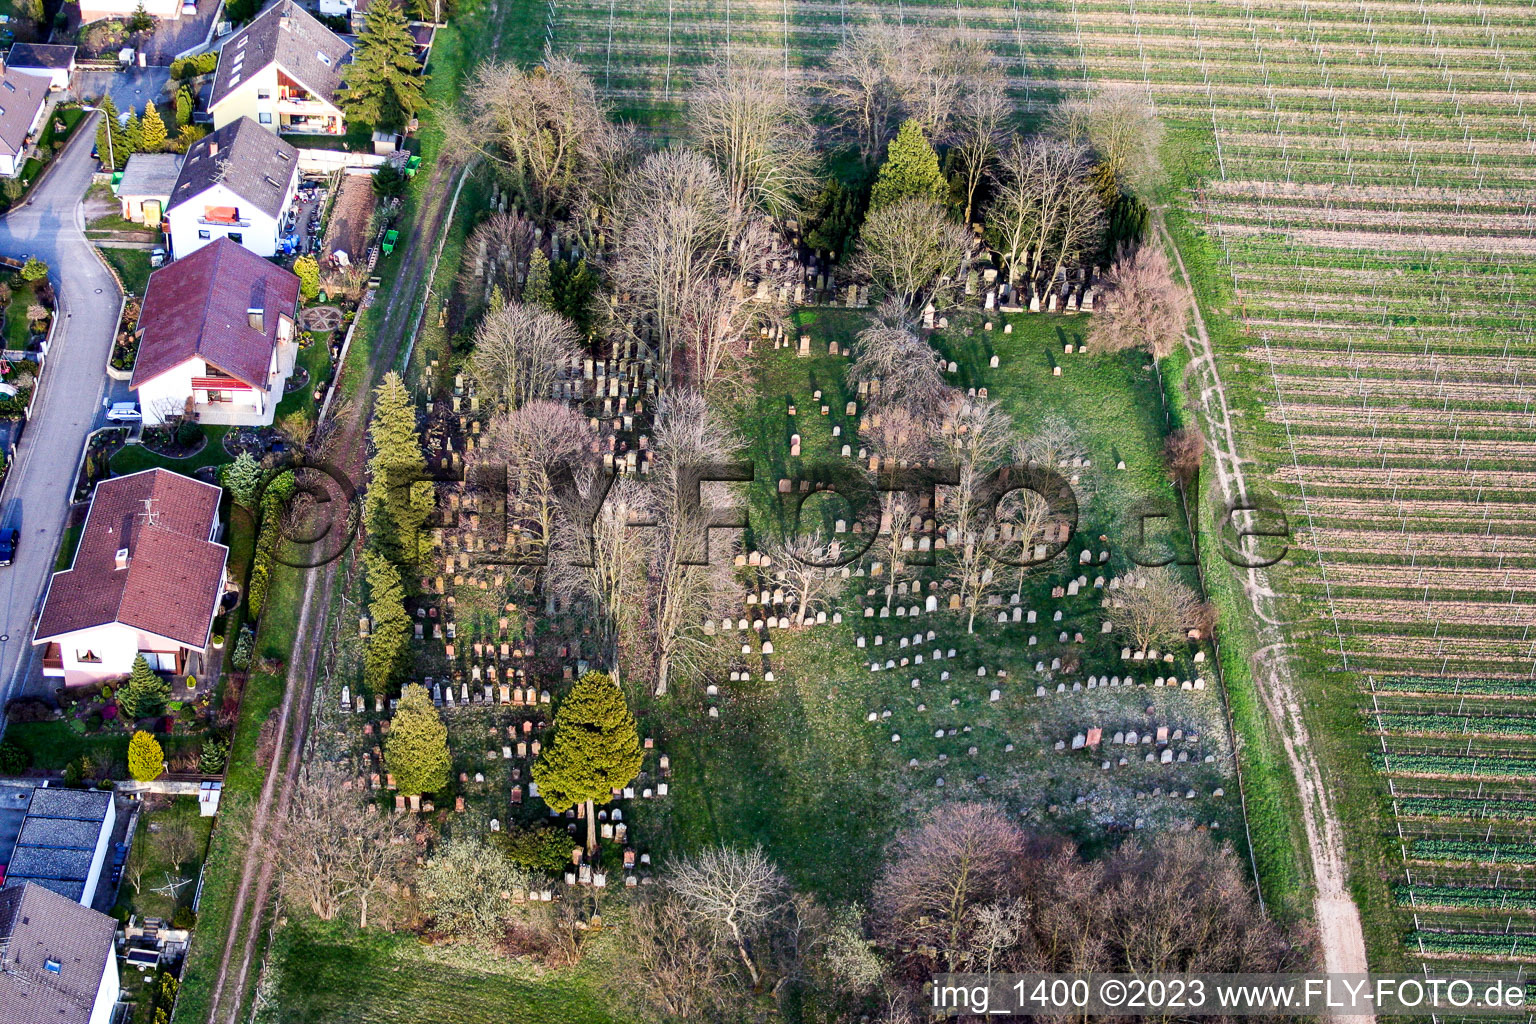 Old cemetery in the district Ingenheim in Billigheim-Ingenheim in the state Rhineland-Palatinate, Germany